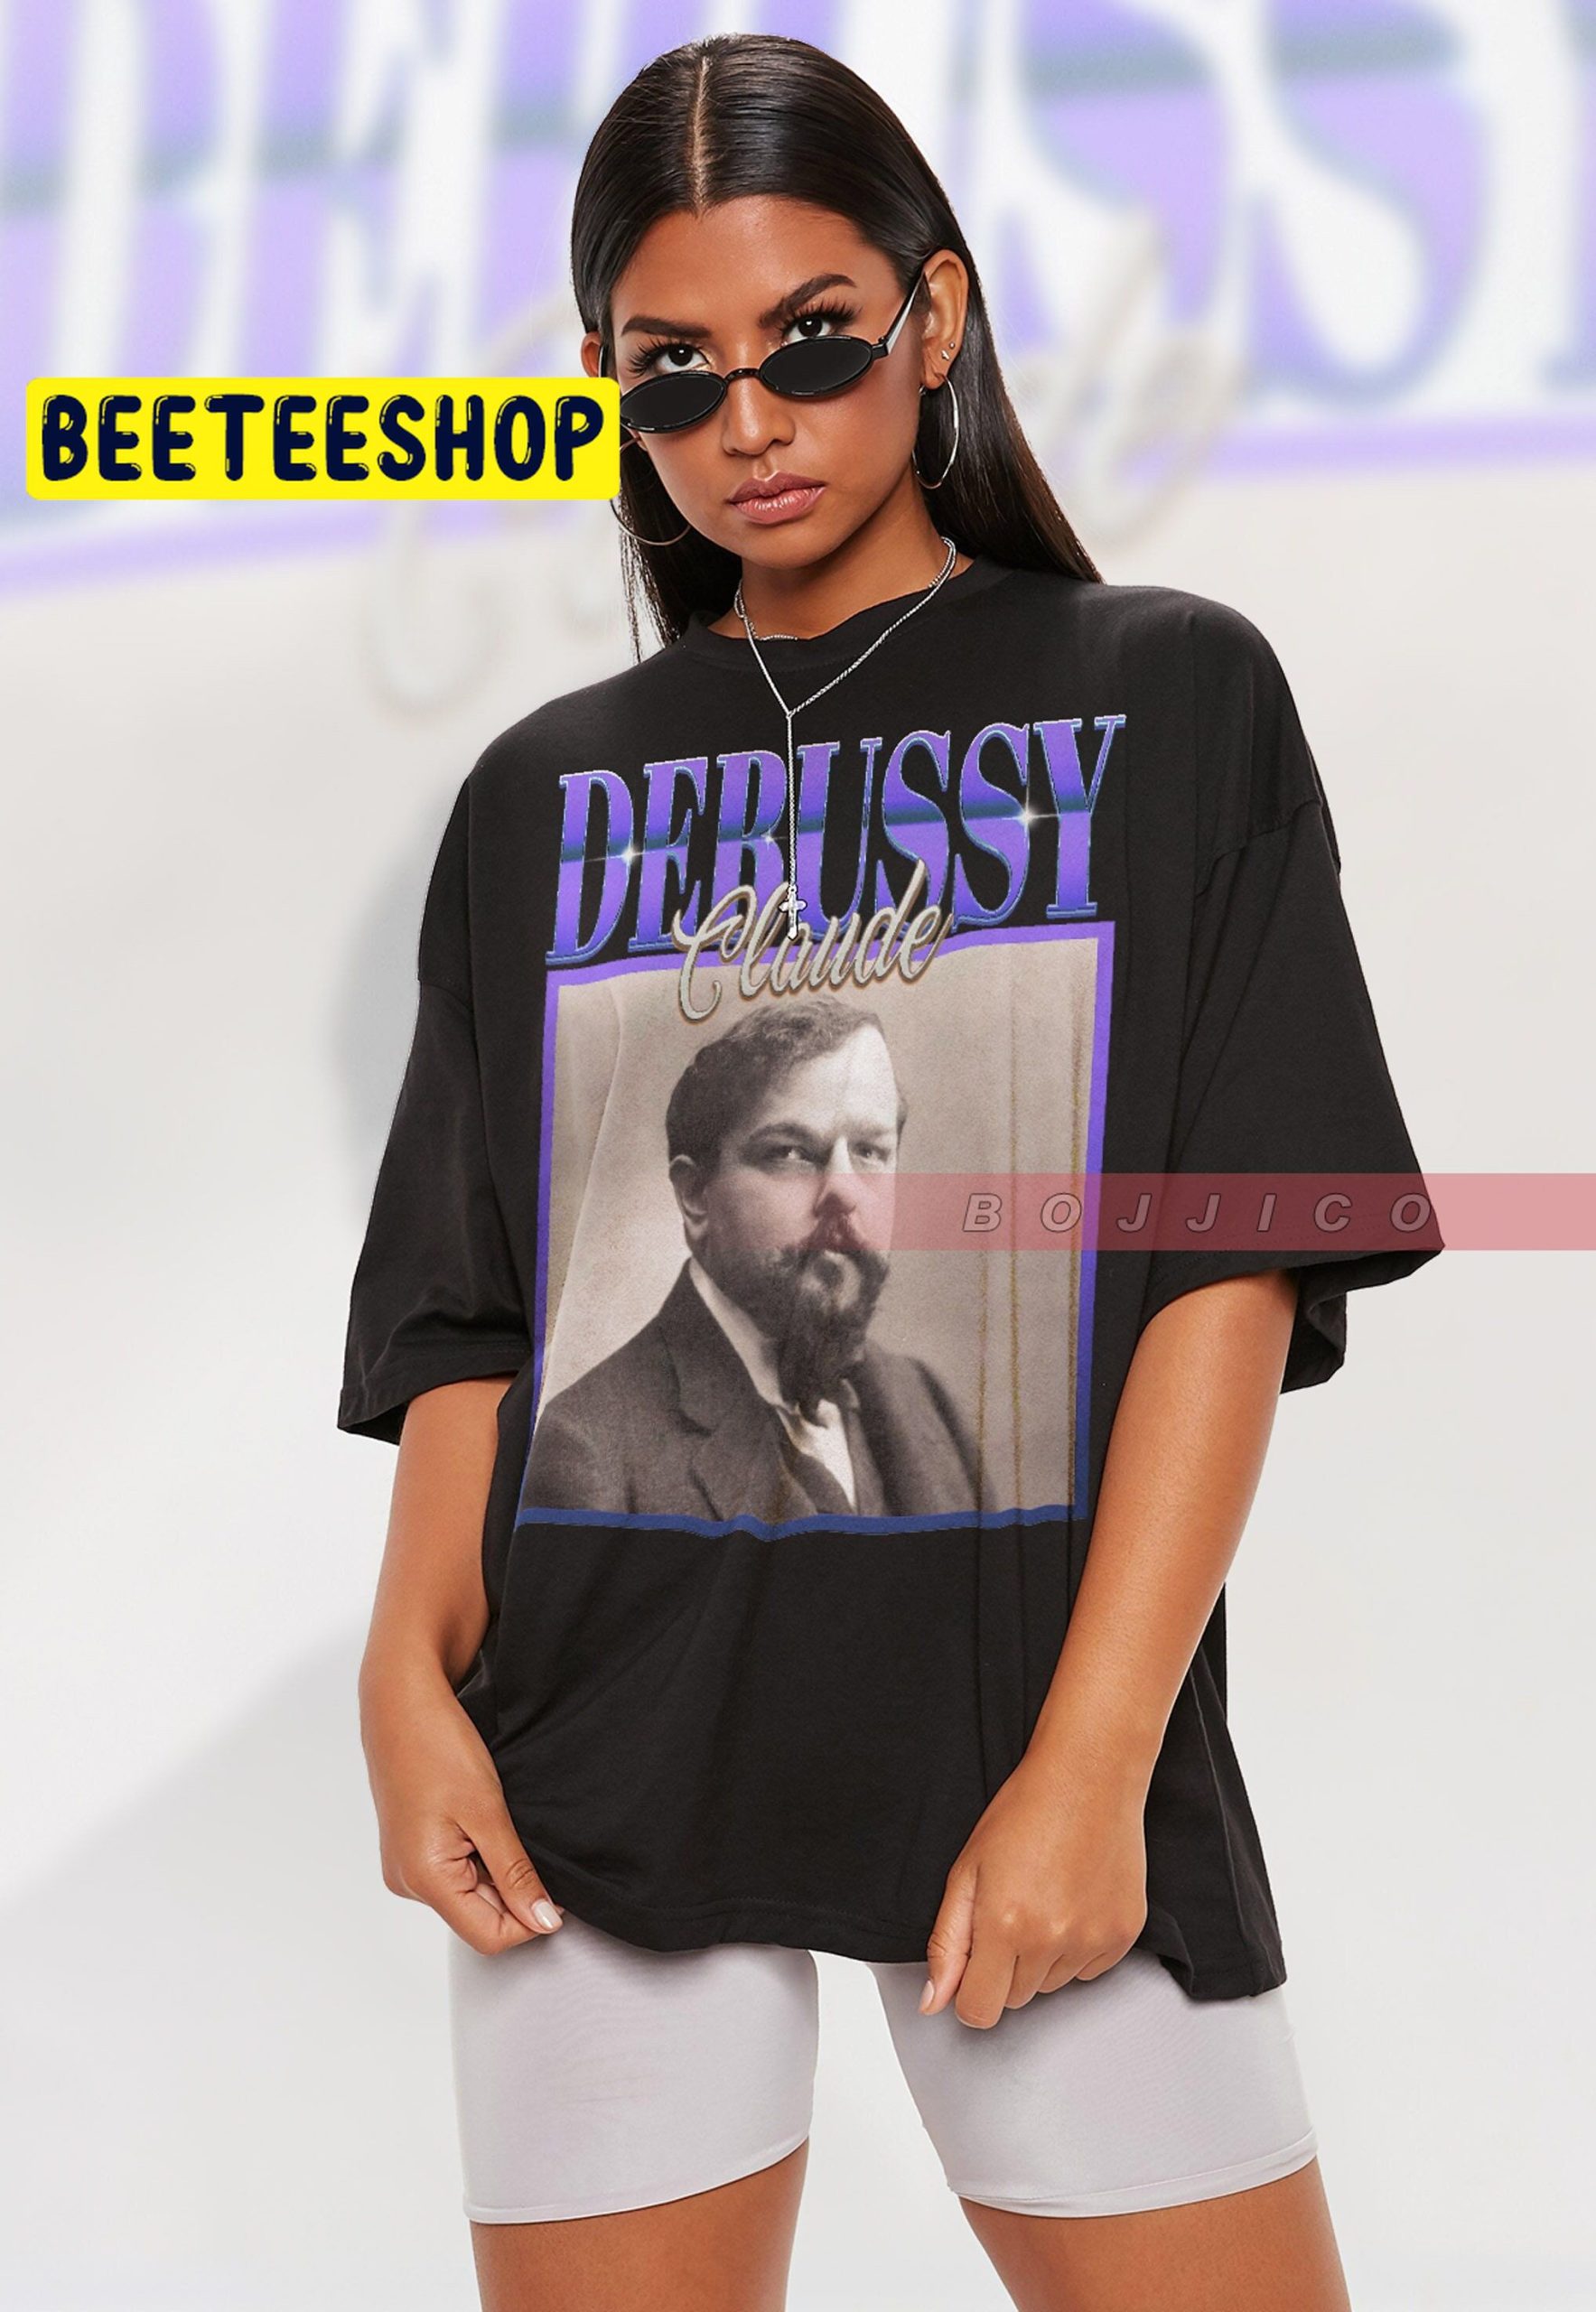 Claude Debussy Classical Music Artist Trending Unisex T-Shirt - Beeteeshop